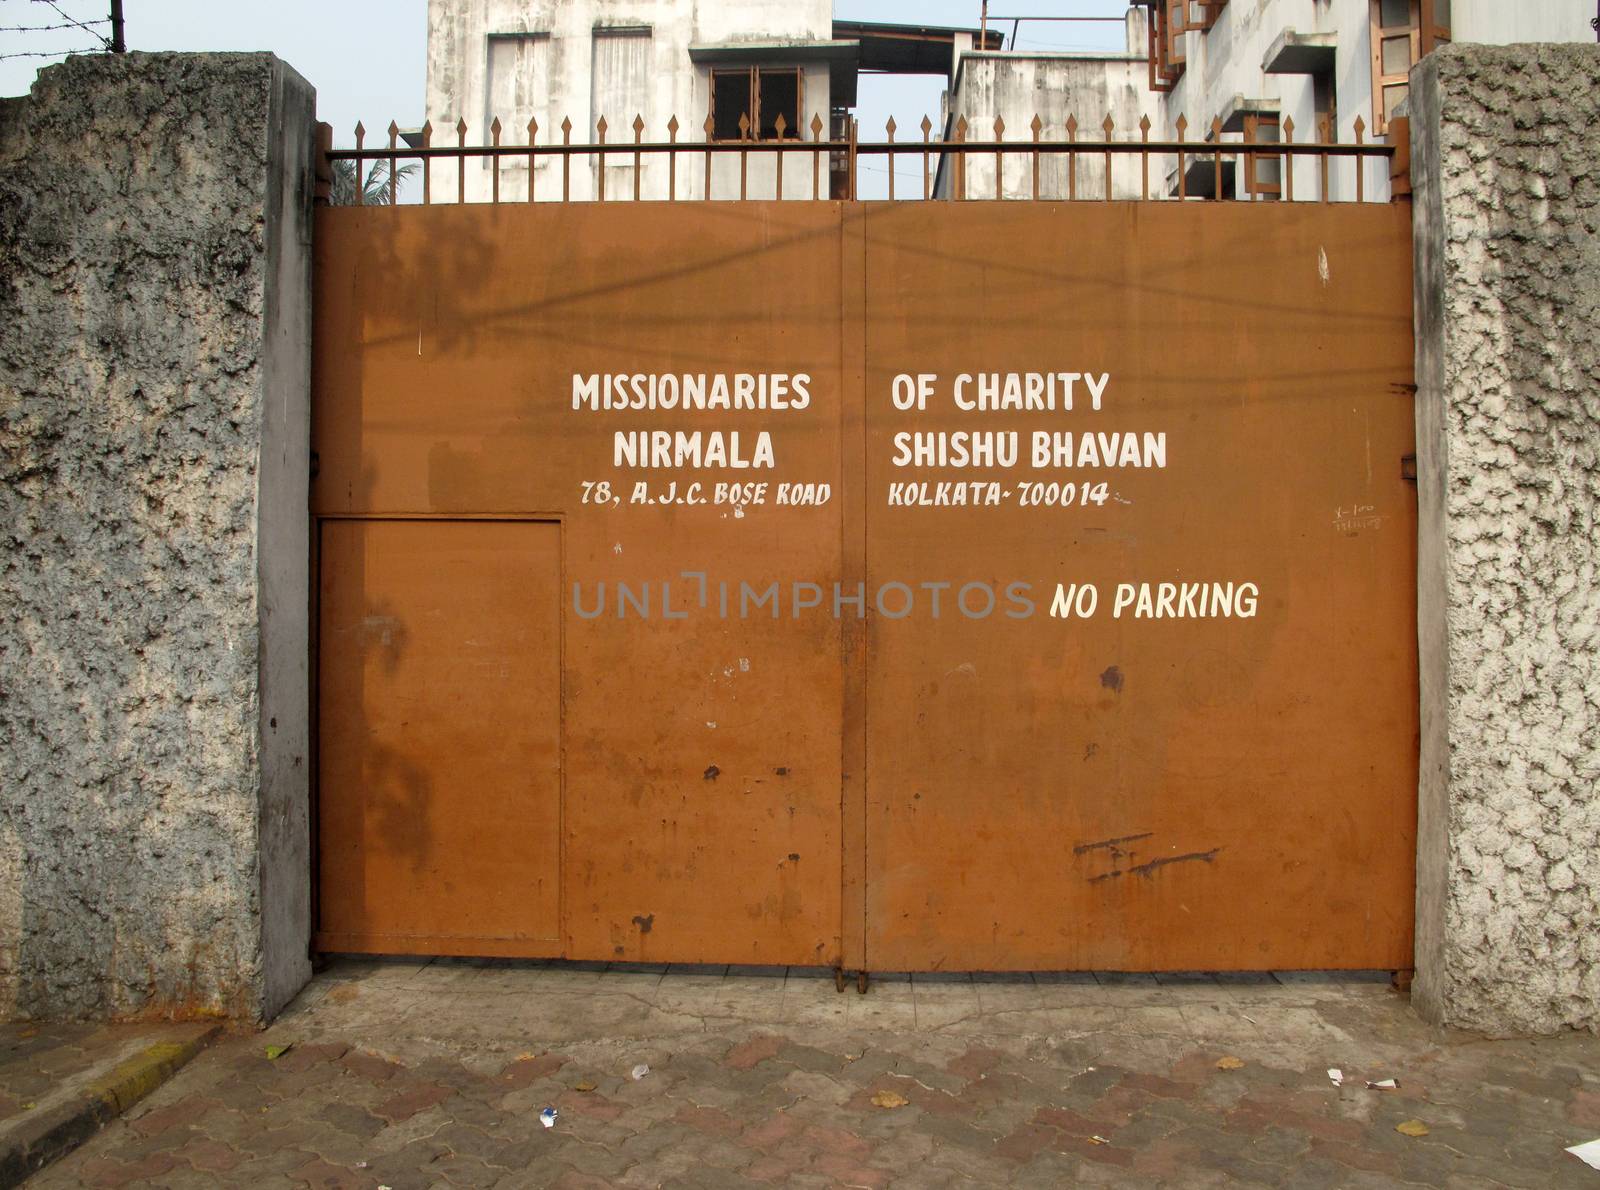 The inscription at the entrance to Shishu Bhavan in Kolkata by atlas